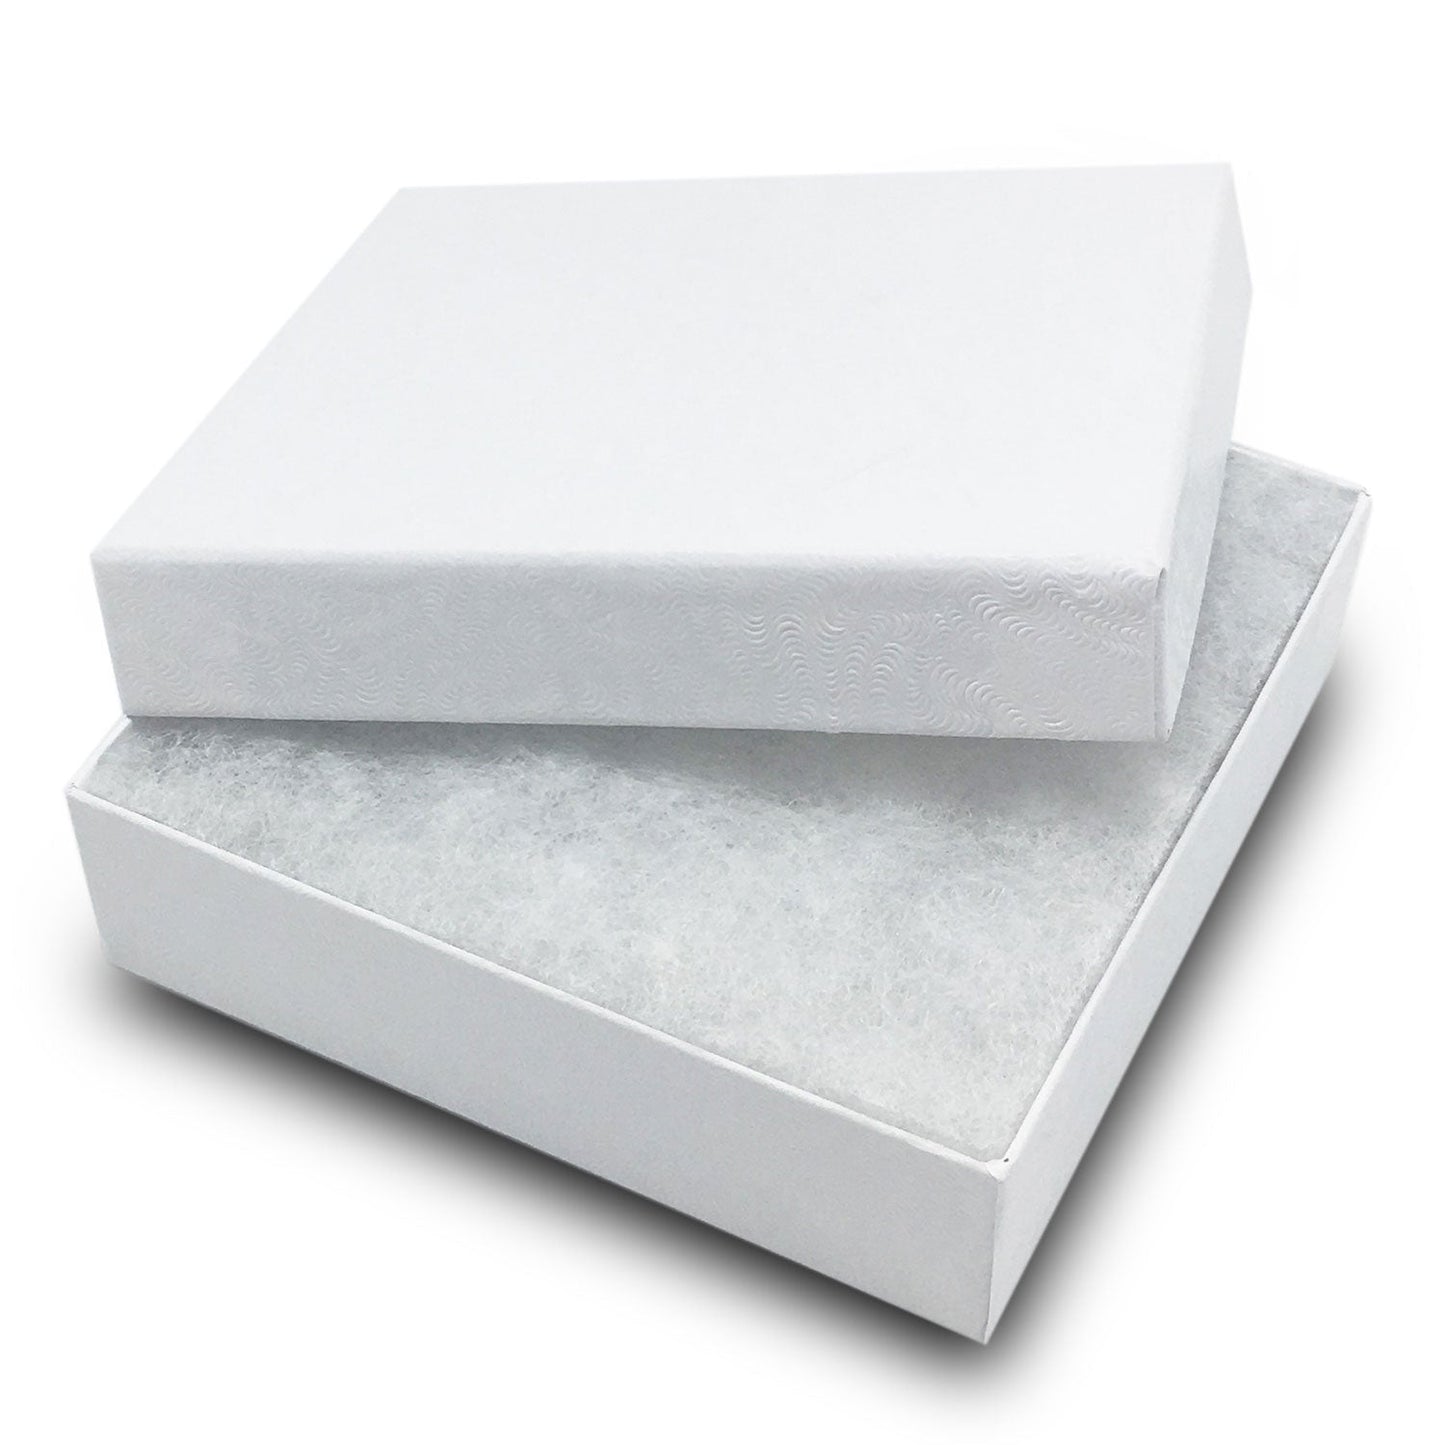 #33 - 3 1/2" x 3 1/2" x 1" White Swirl Cotton Filled Paper Box